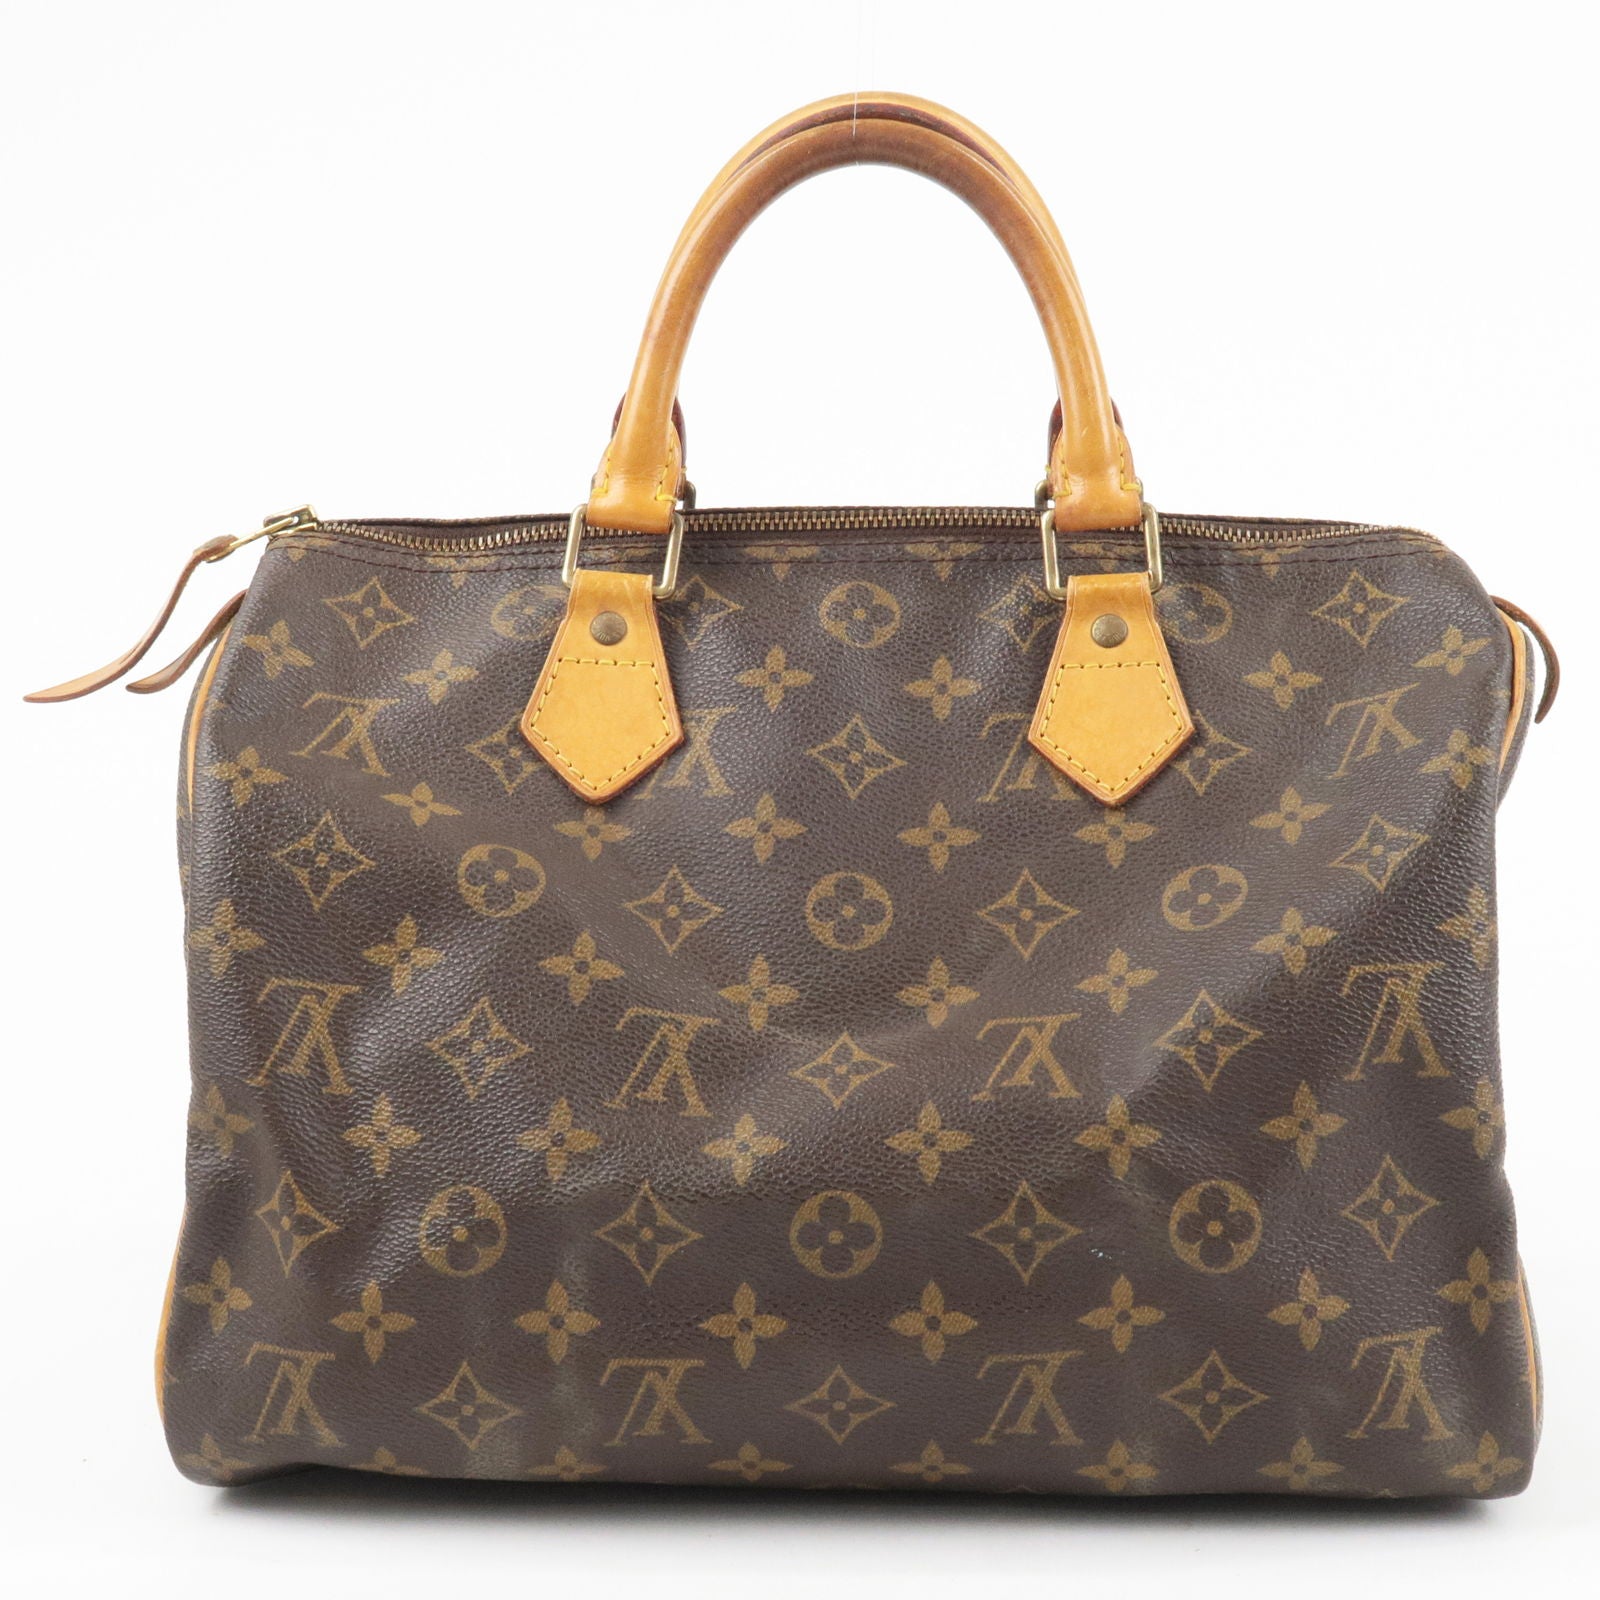 Louis Vuitton Speedy Stephen Sprouse Roses 30 Shoulder Bag